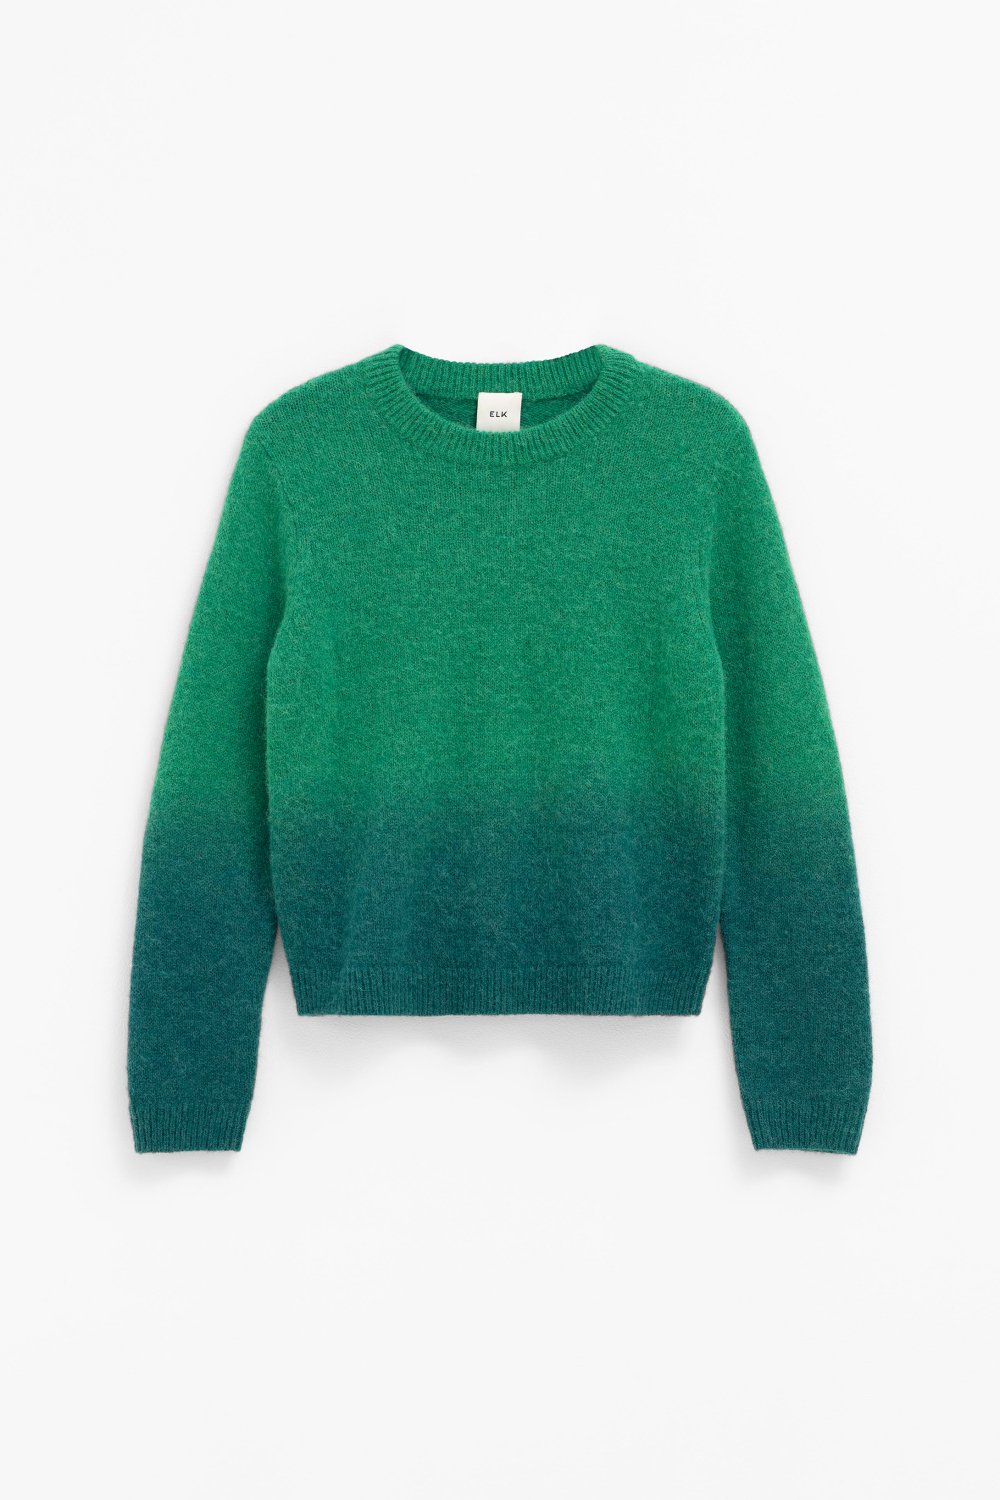 elk-ombre-sweater-green-teal 5